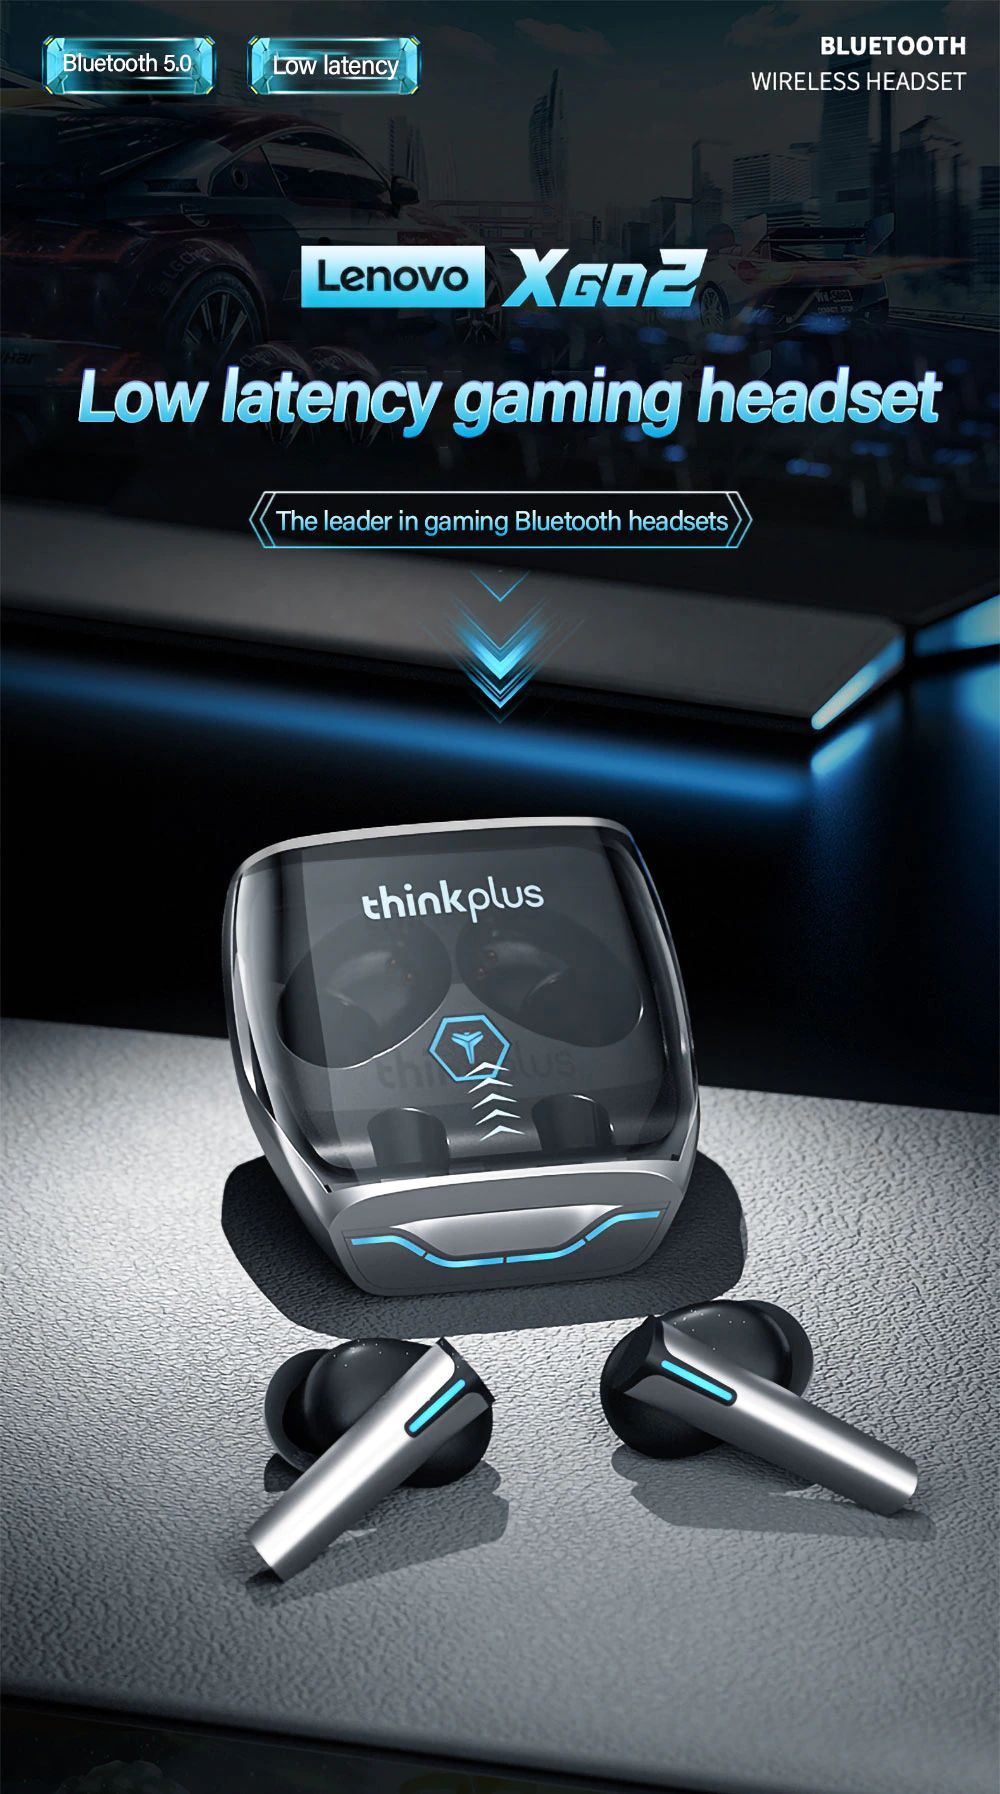 Lenovo Thinkplus XG02 Wireless BT5.0 Gaming Earbuds